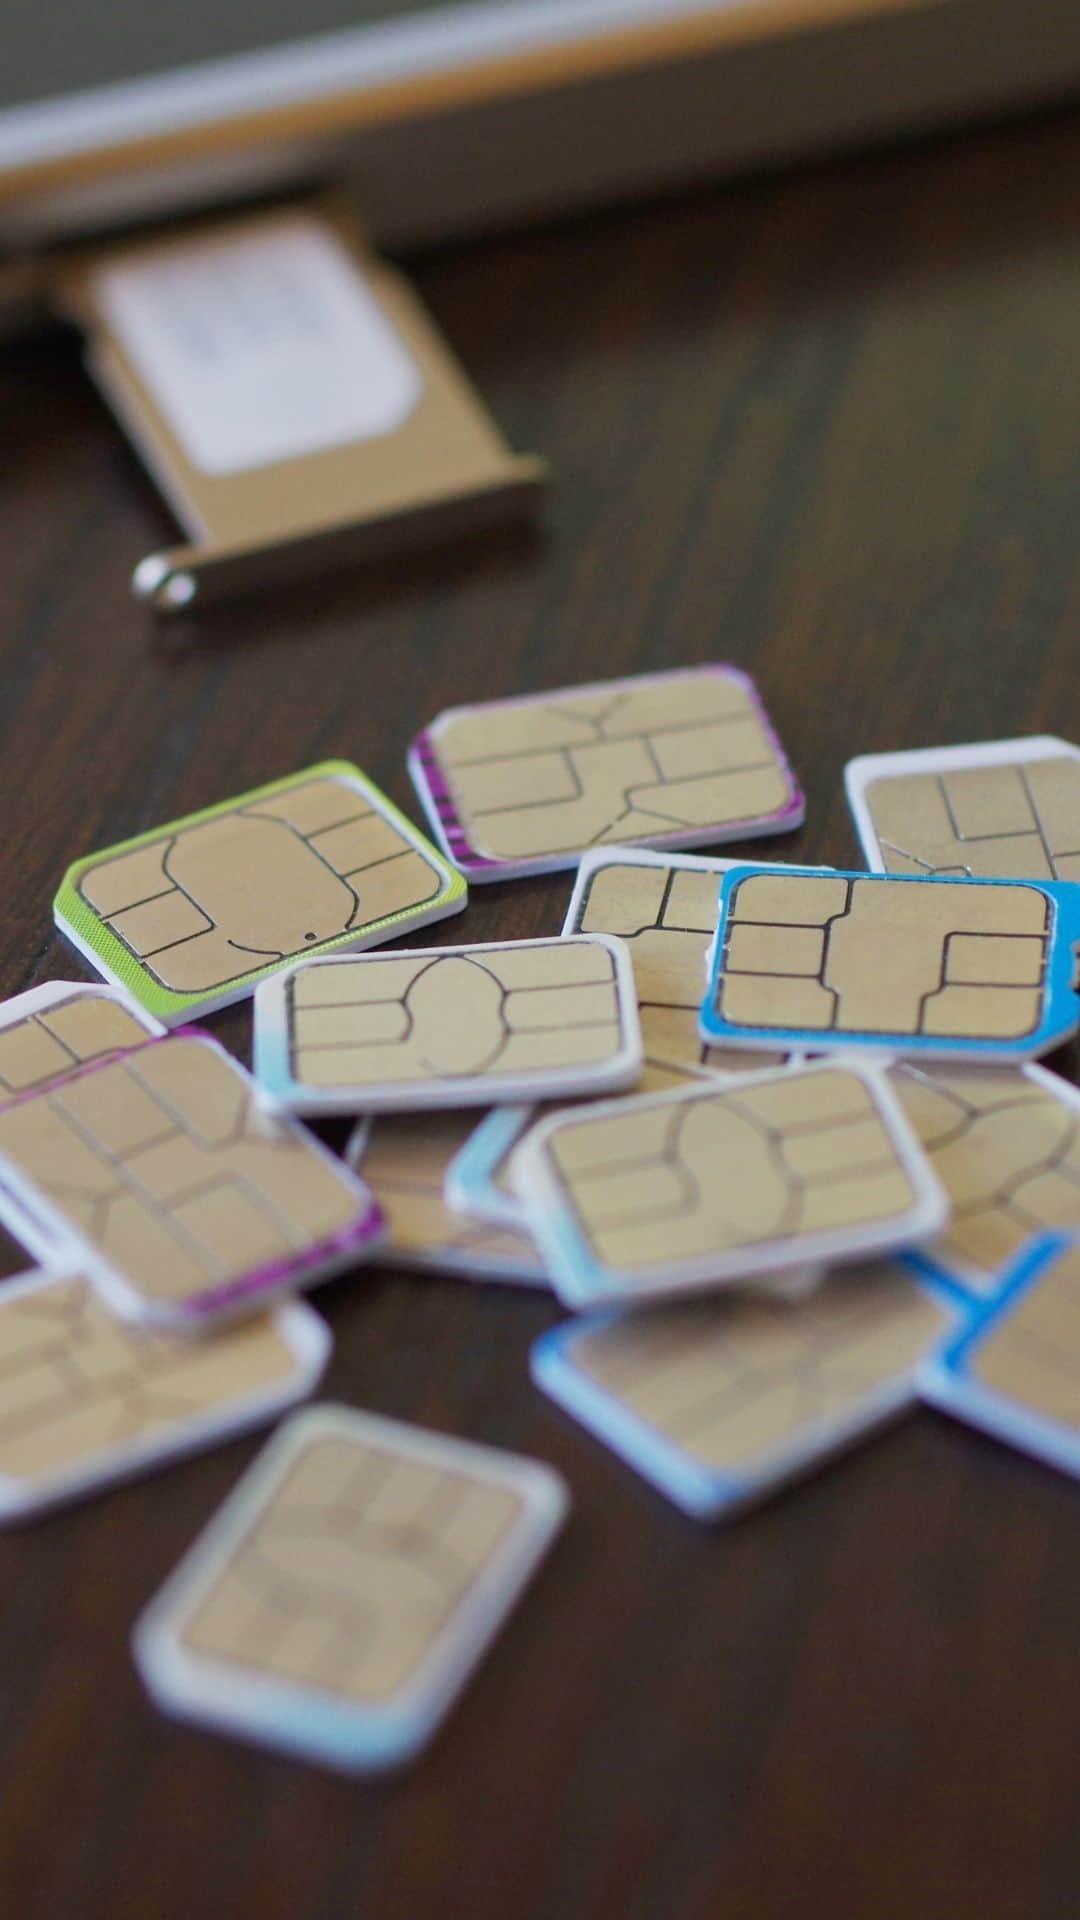 multiple sim cards on a table